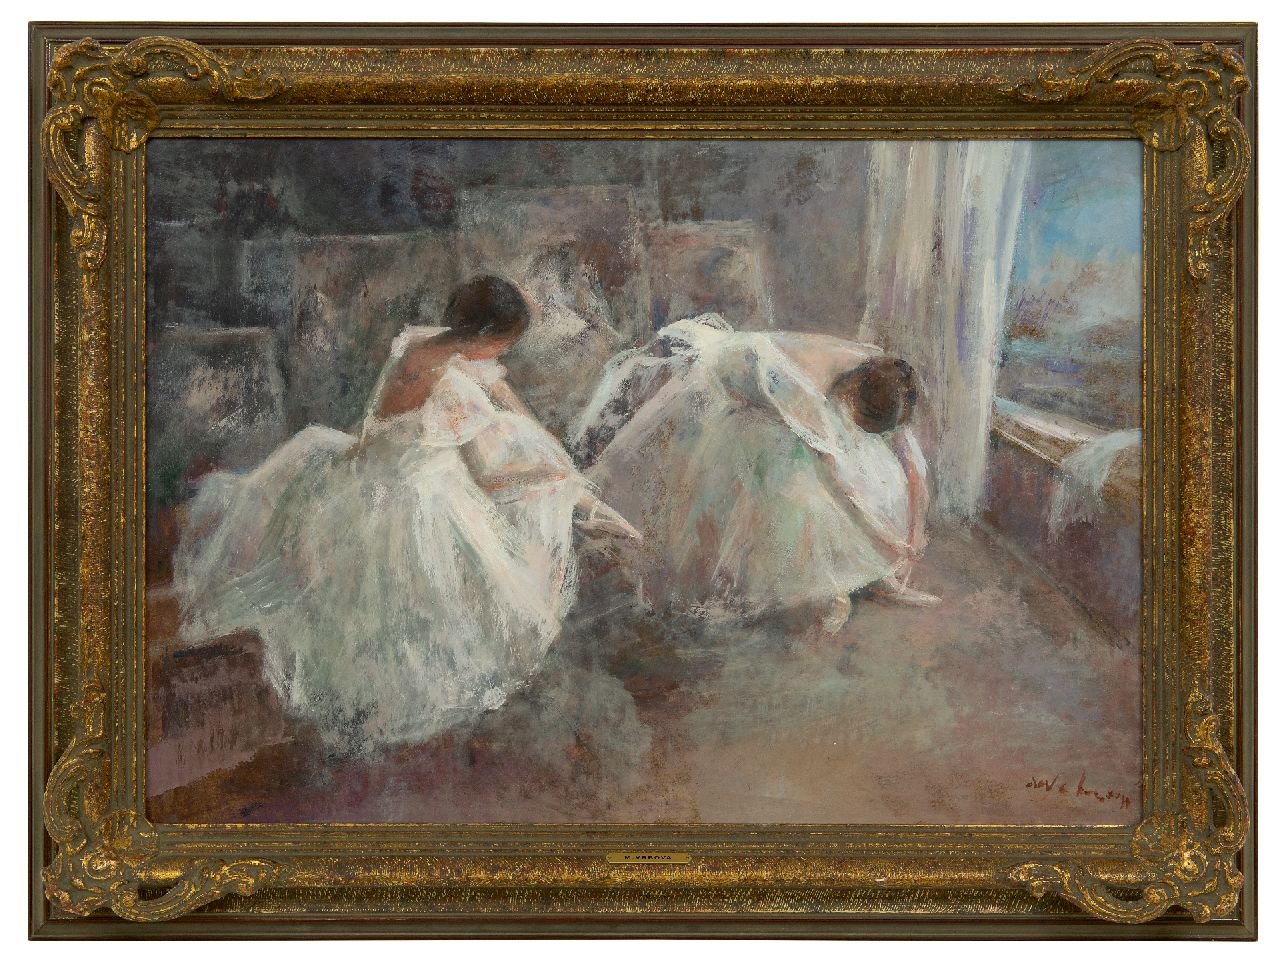 Vrbová-Štefková M.  | Miroslava Vrbová-Štefková | Paintings offered for sale | Dancers in a painters studio, oil on board 45.0 x 65.0 cm, signed l.r. (indistinctly) and without frame